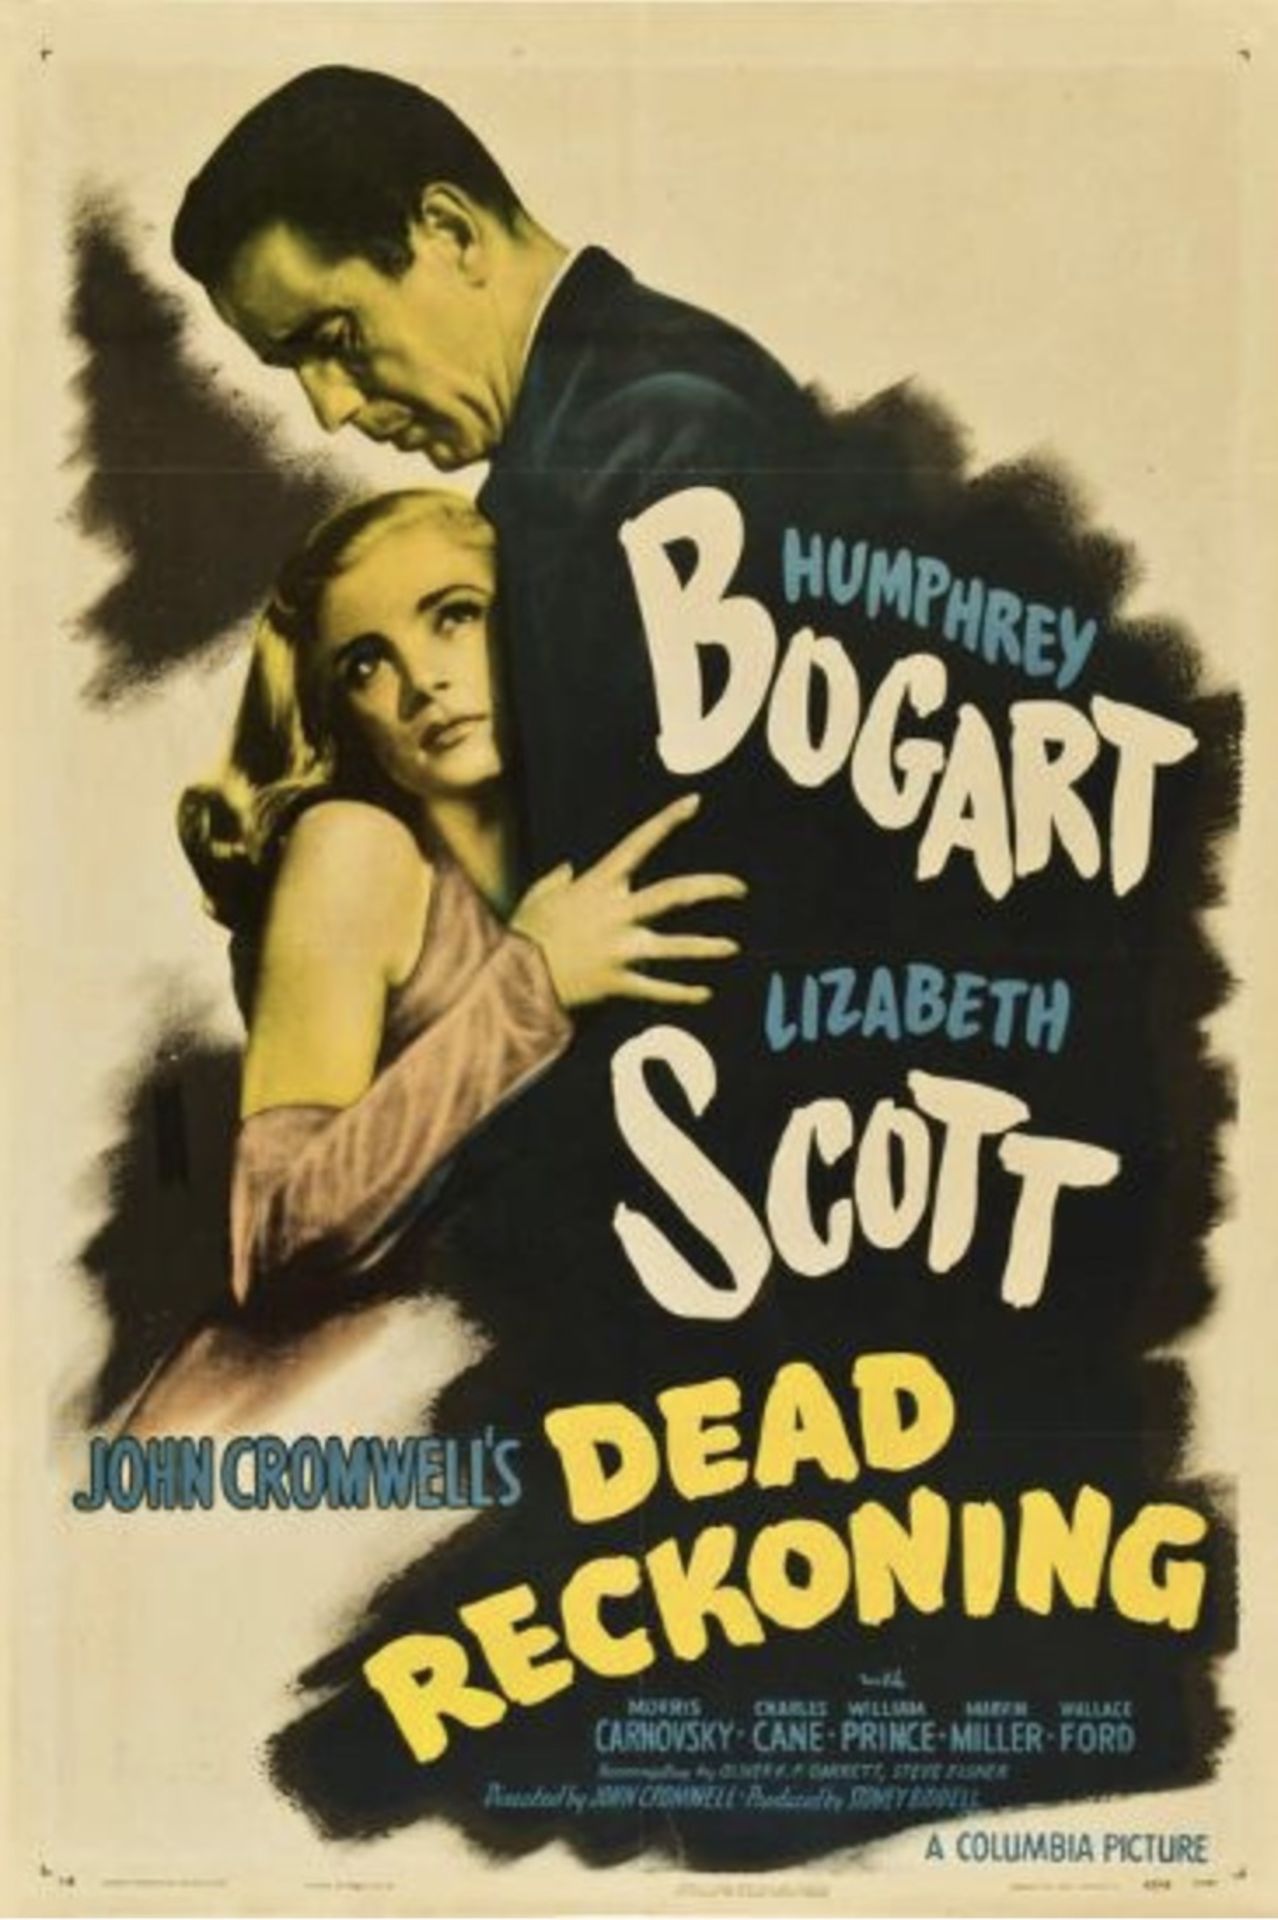 Humphrey Bogart "Dead Reckoning, 1949" Poster